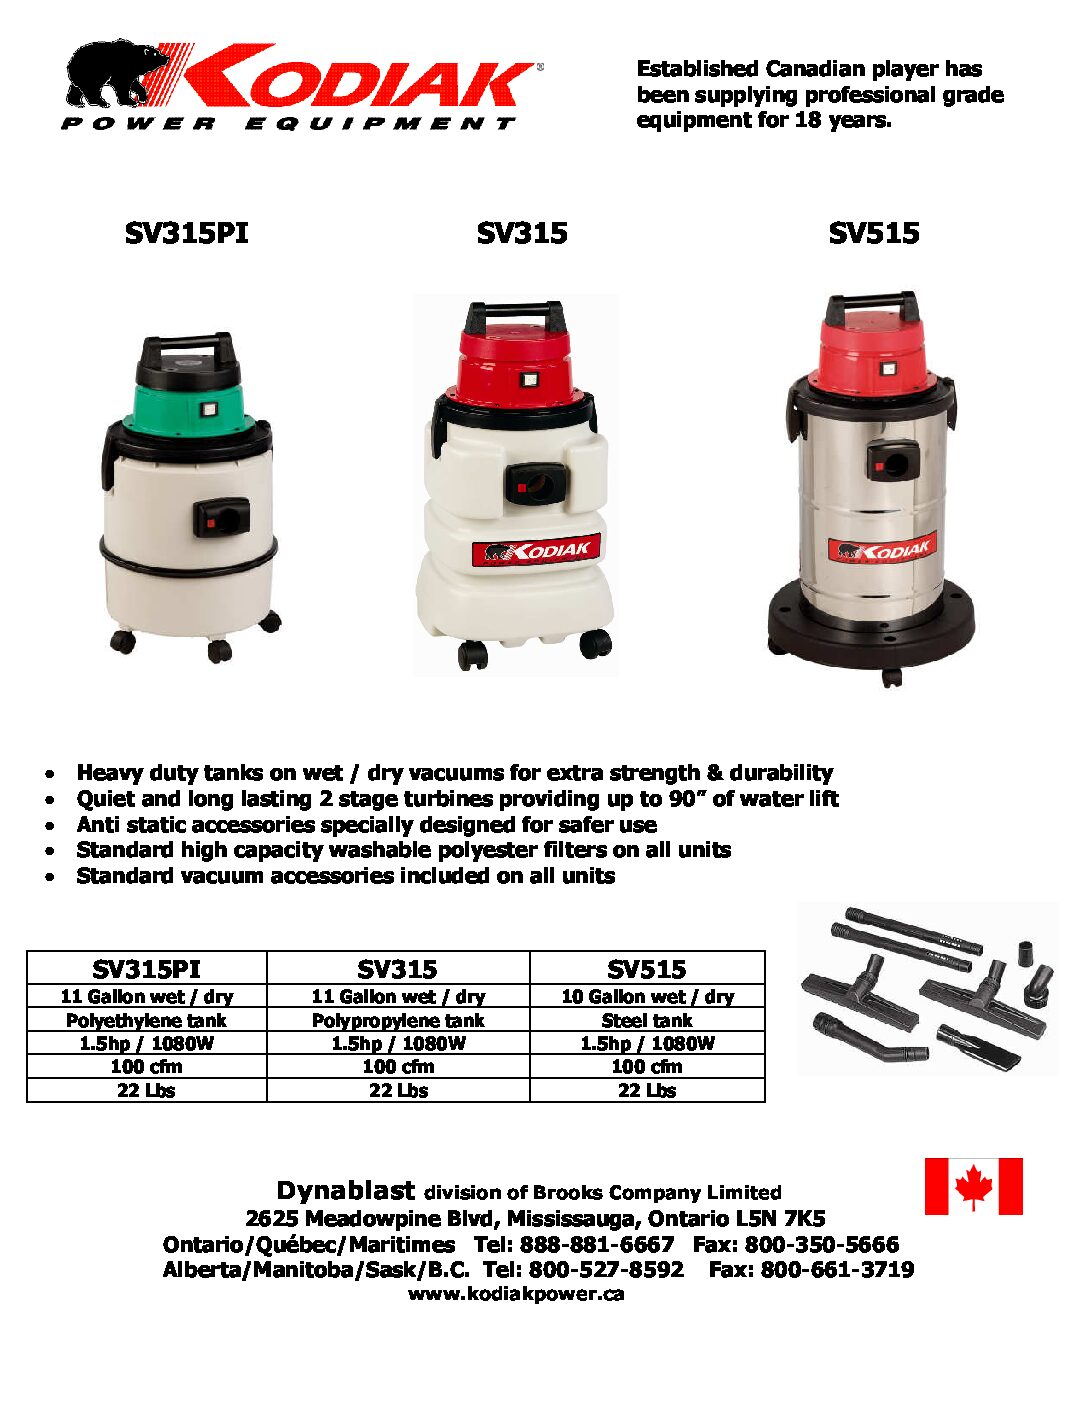 Kodiak SV515 Vacuums Product Sheet